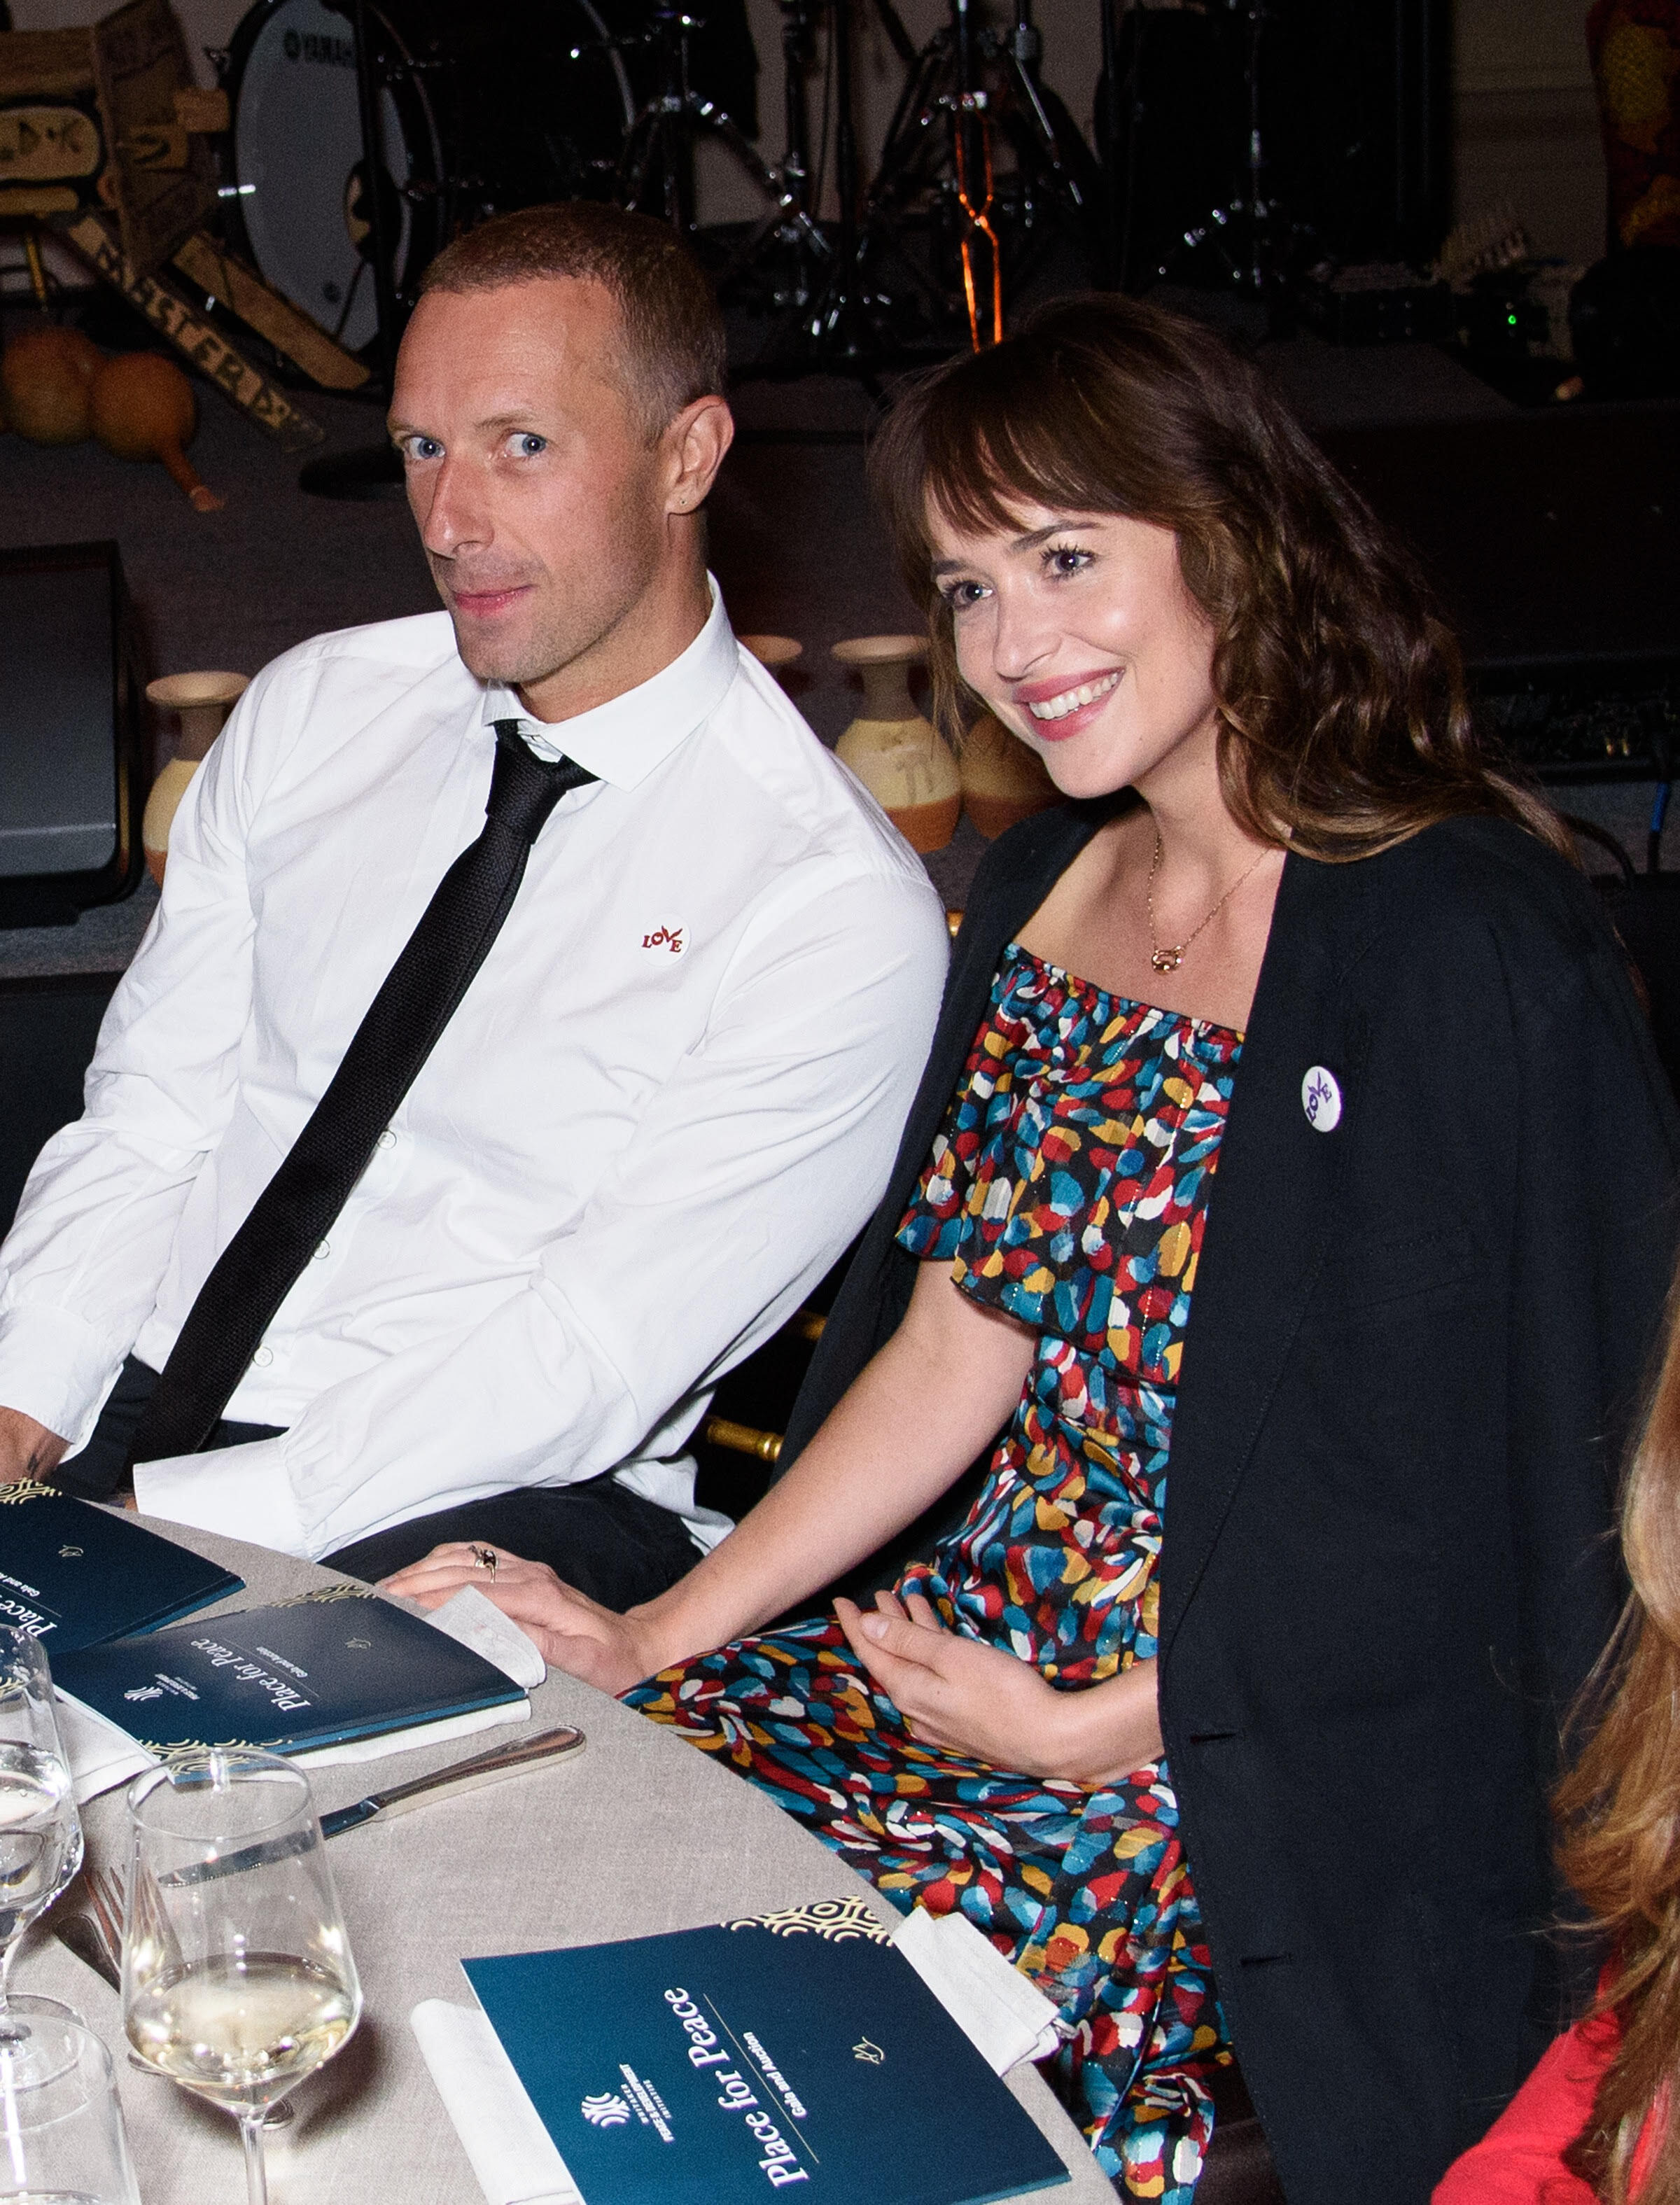 Chris Martin and Dakota Johnson at an event together